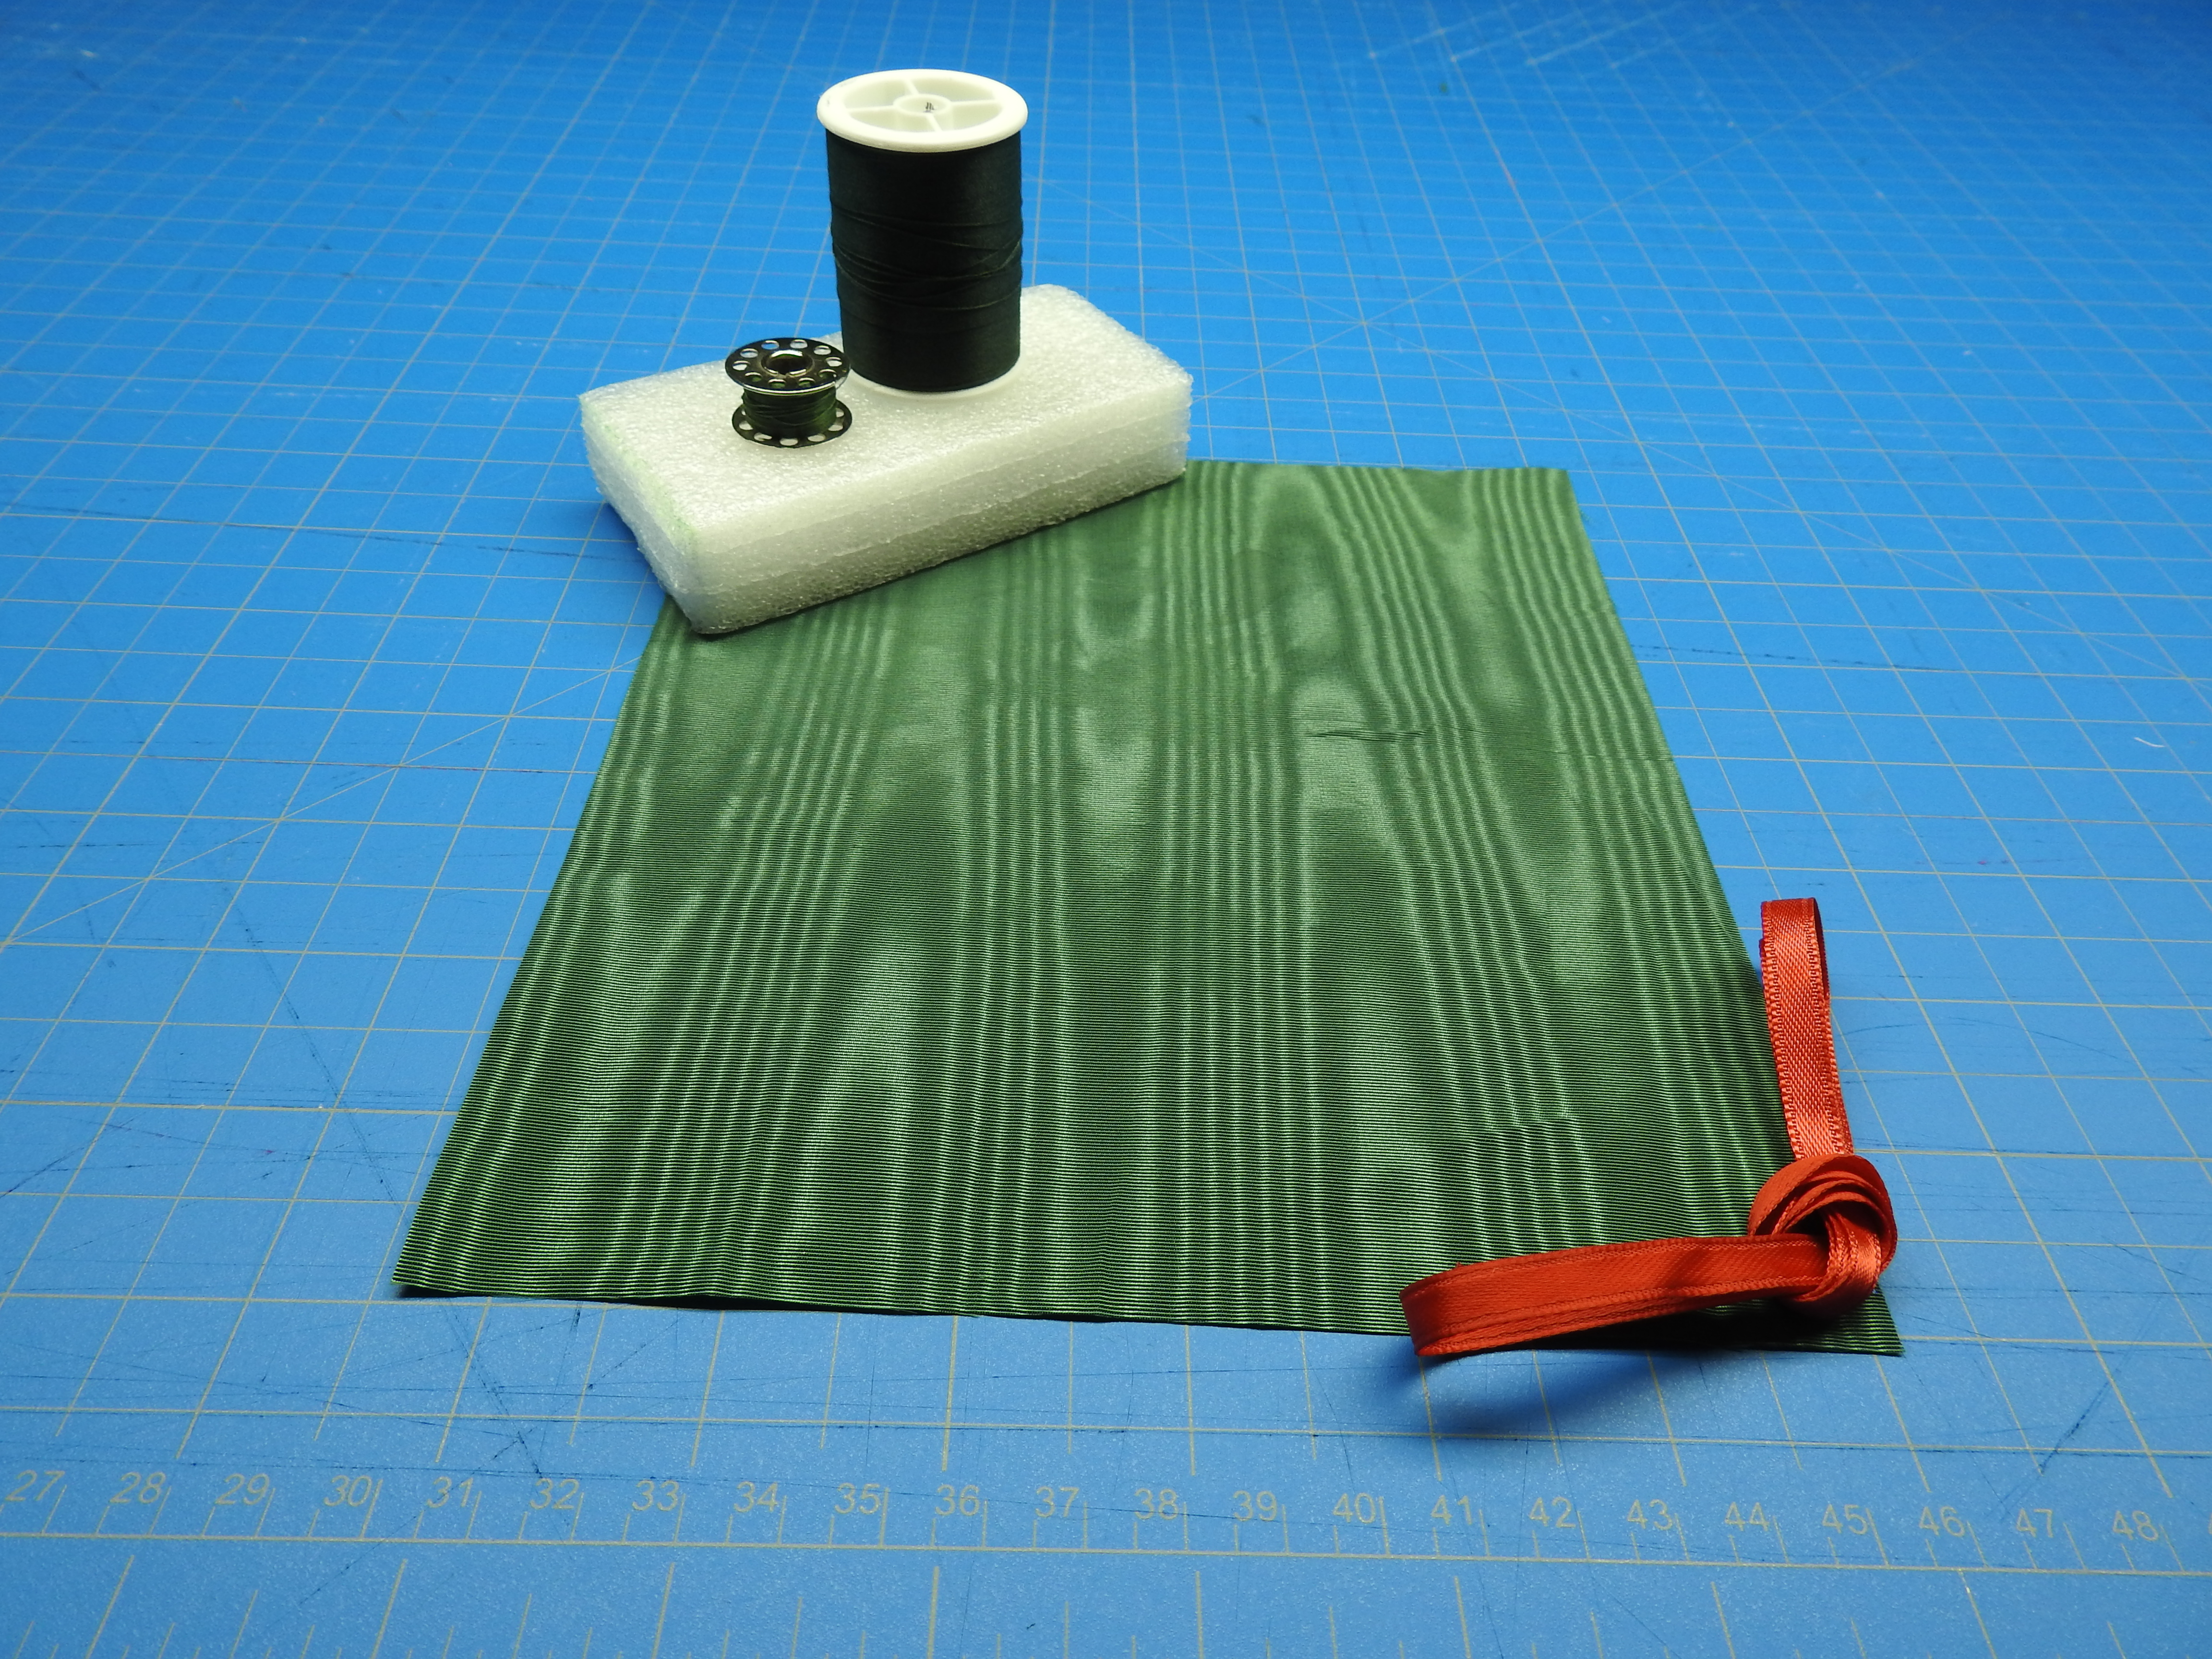 Sewing Materials